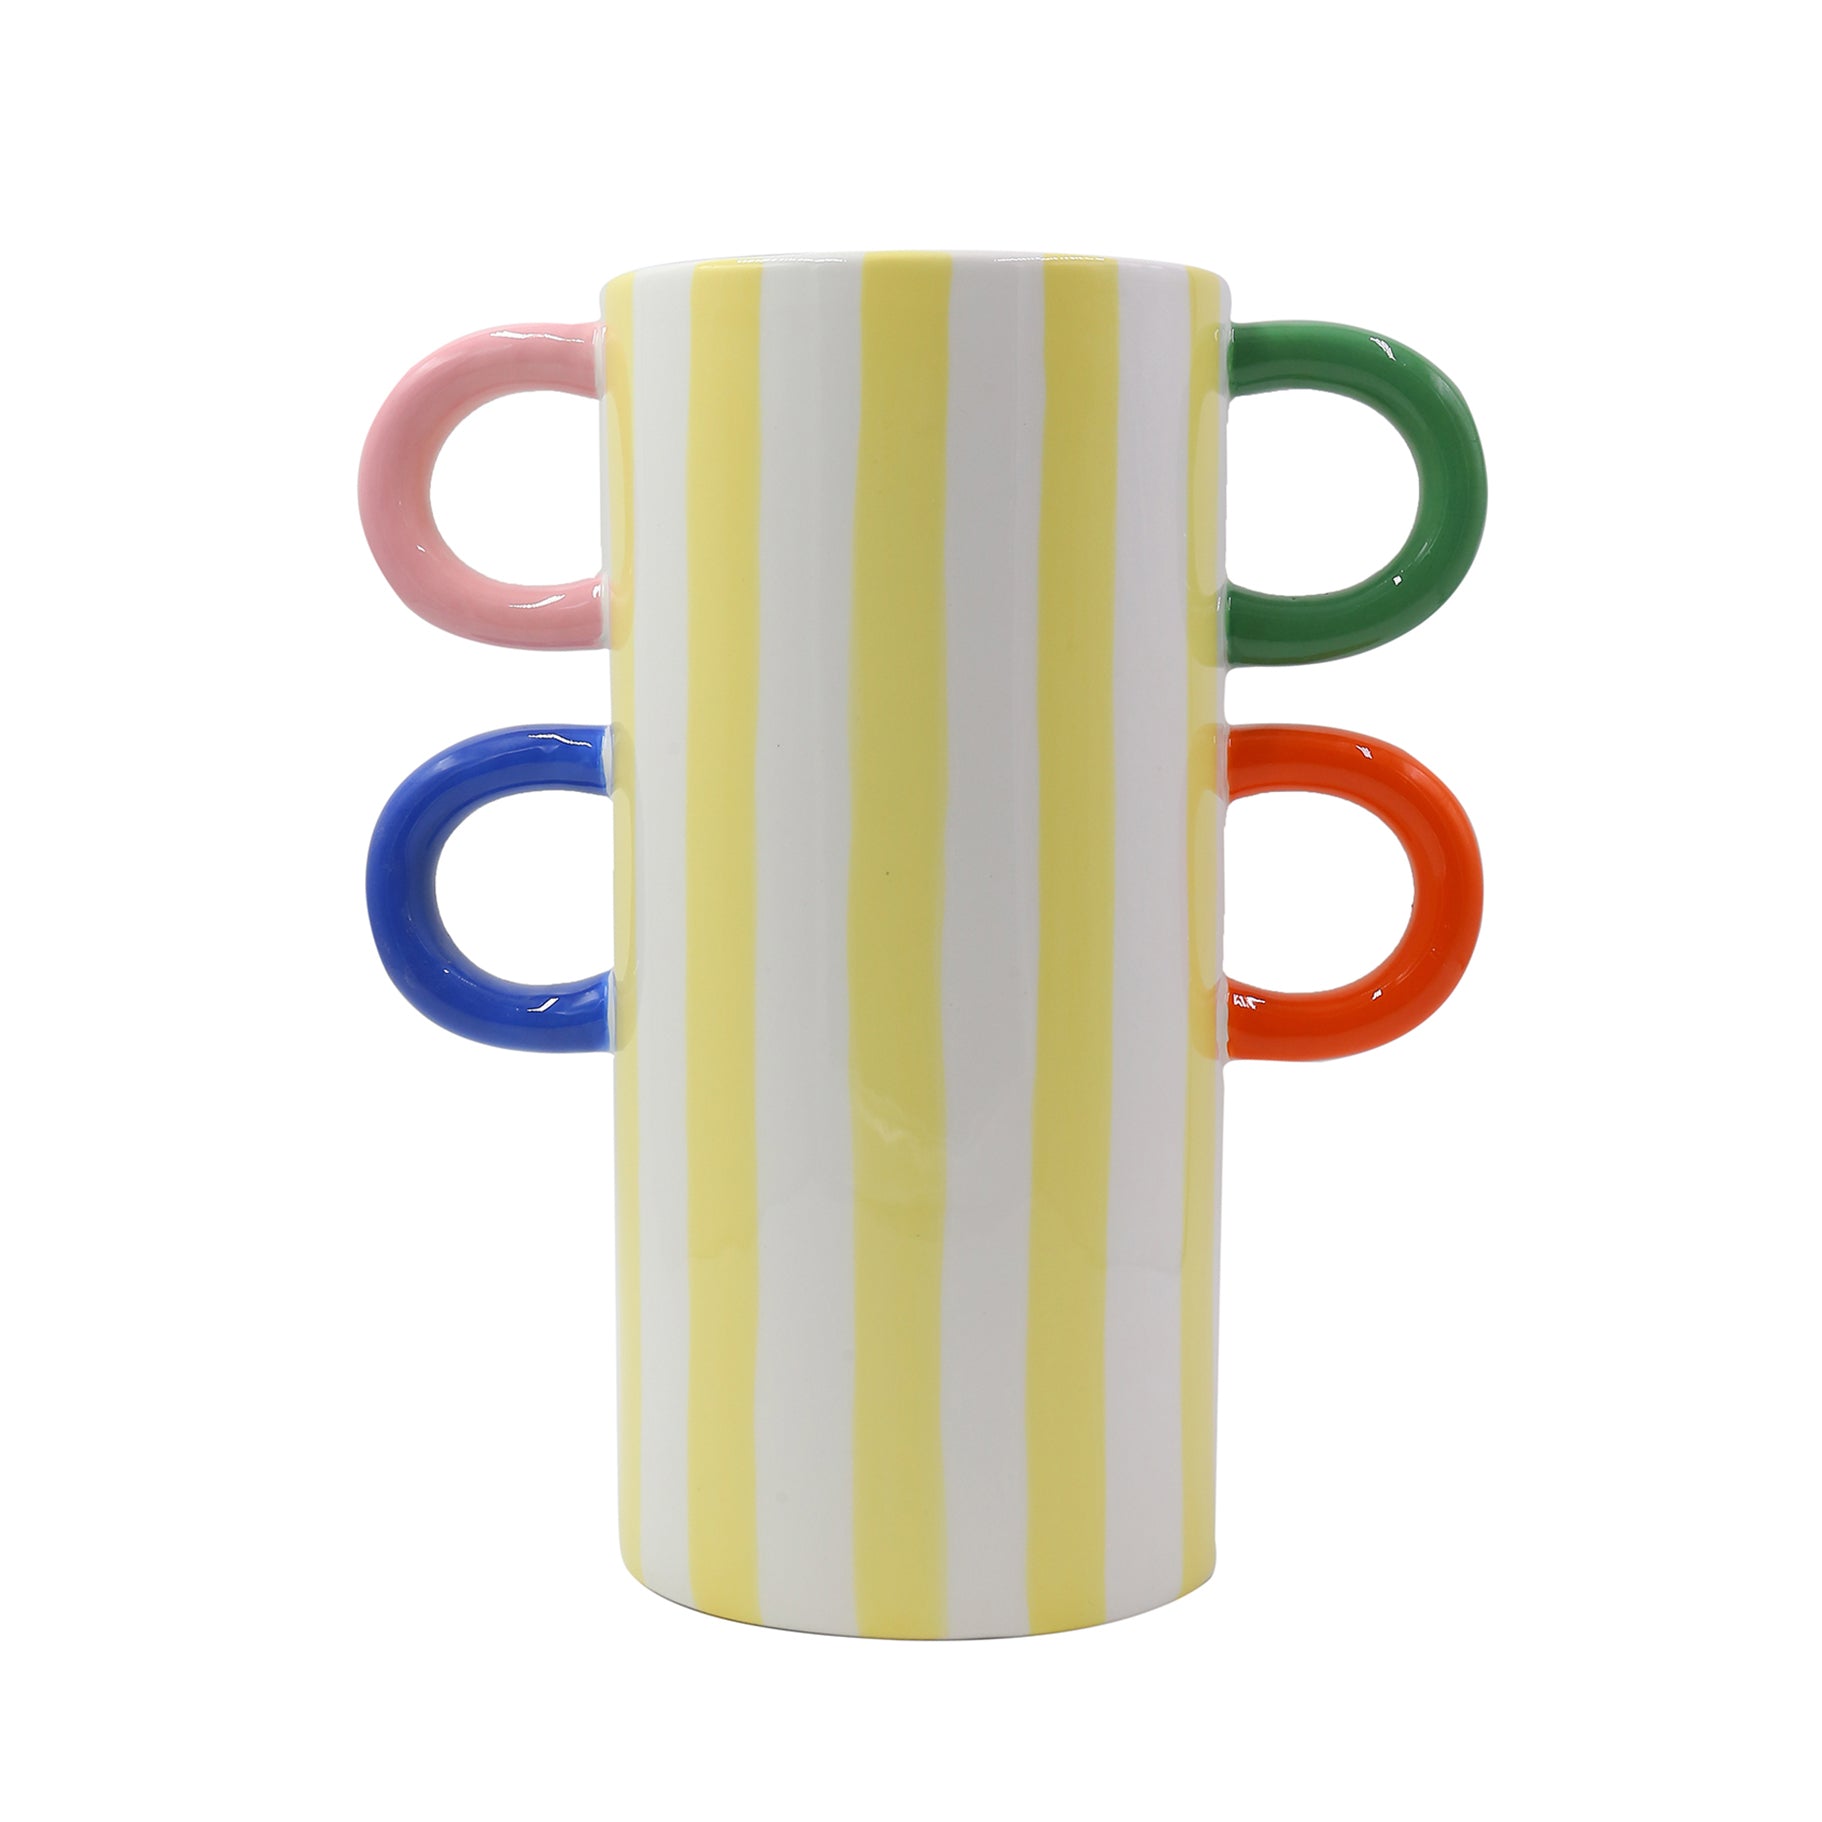 Herring & Bones - Concept Store Joyeux - Que Rico - Vase - Grand vase "Elisa"